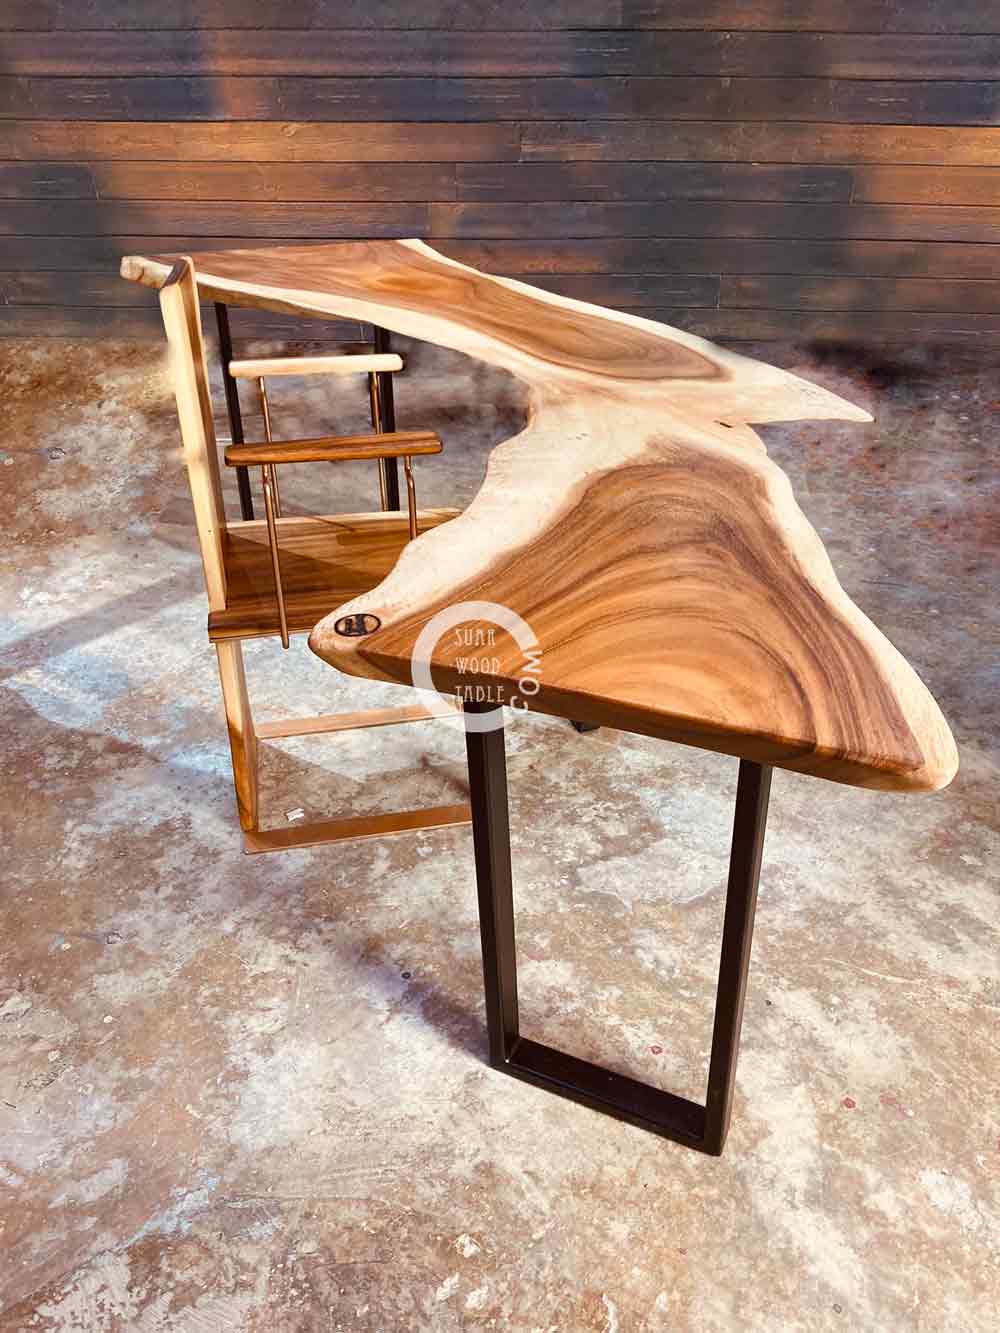 handmade wooden work table